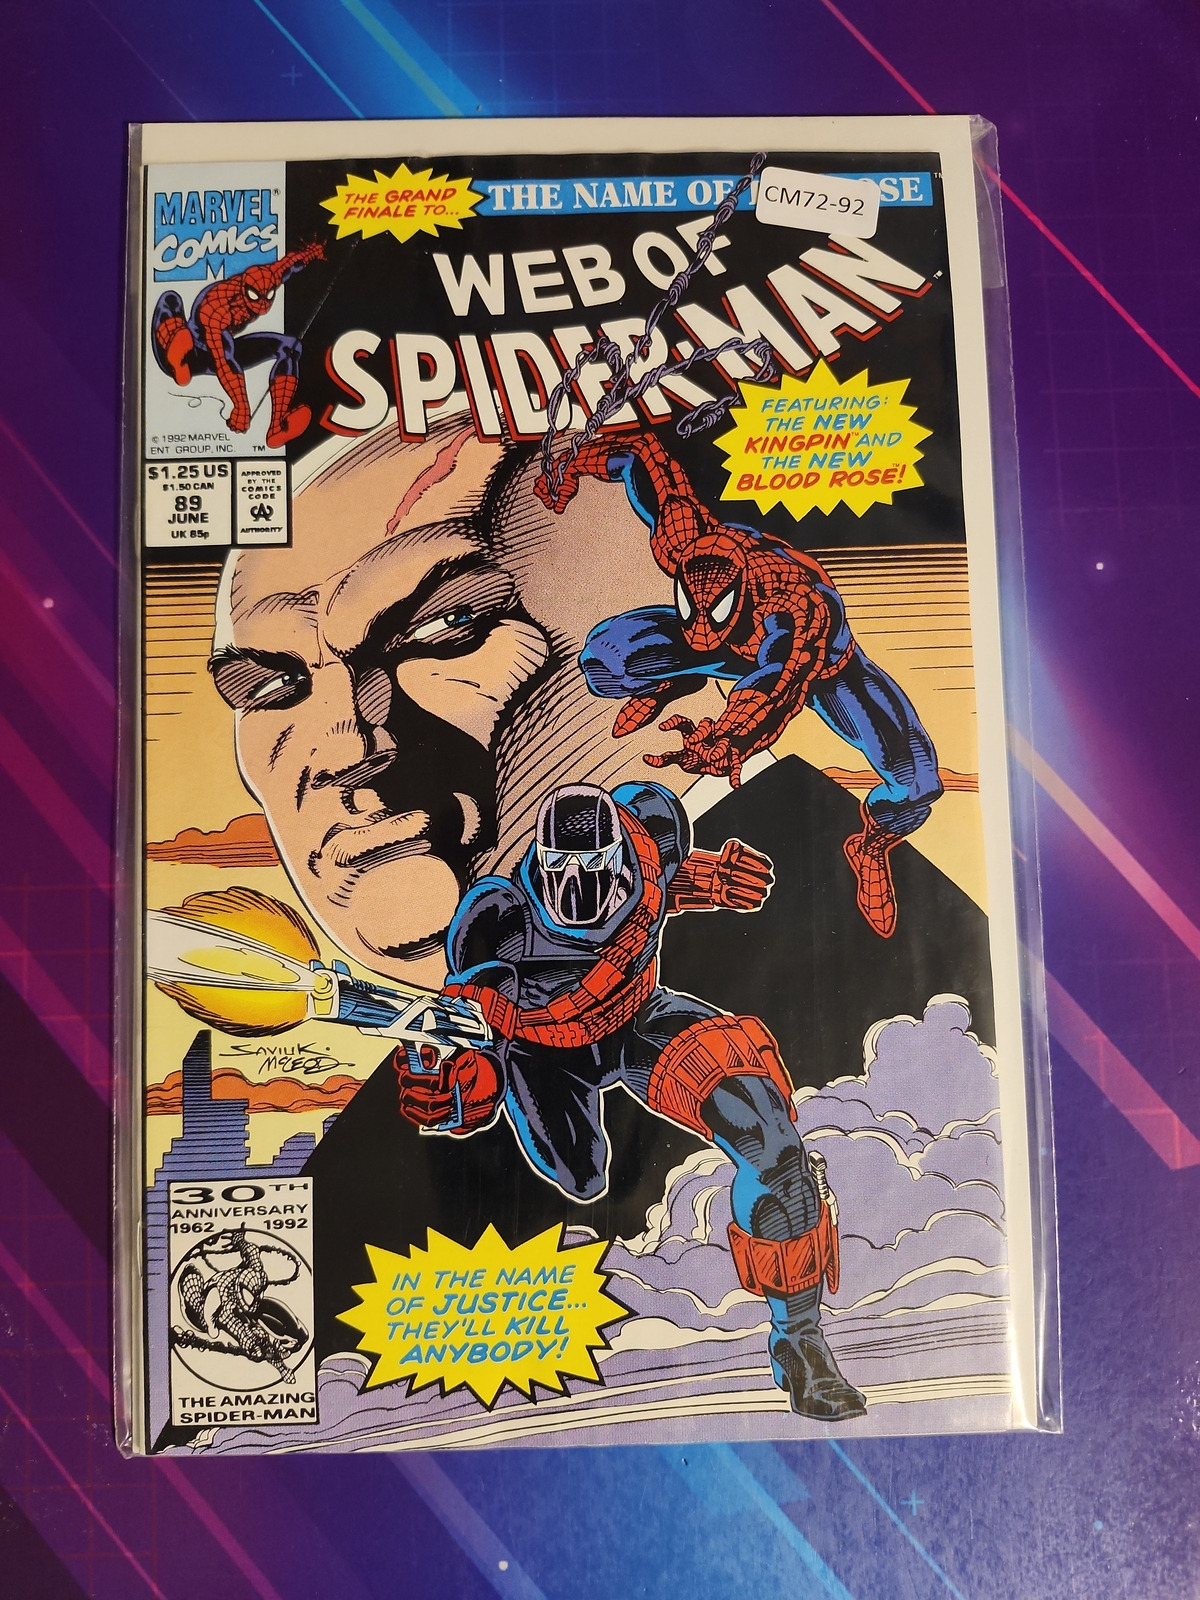 WEB OF SPIDER-MAN #89 VOL. 1 HIGH GRADE MARVEL COMIC BOOK CM72-92